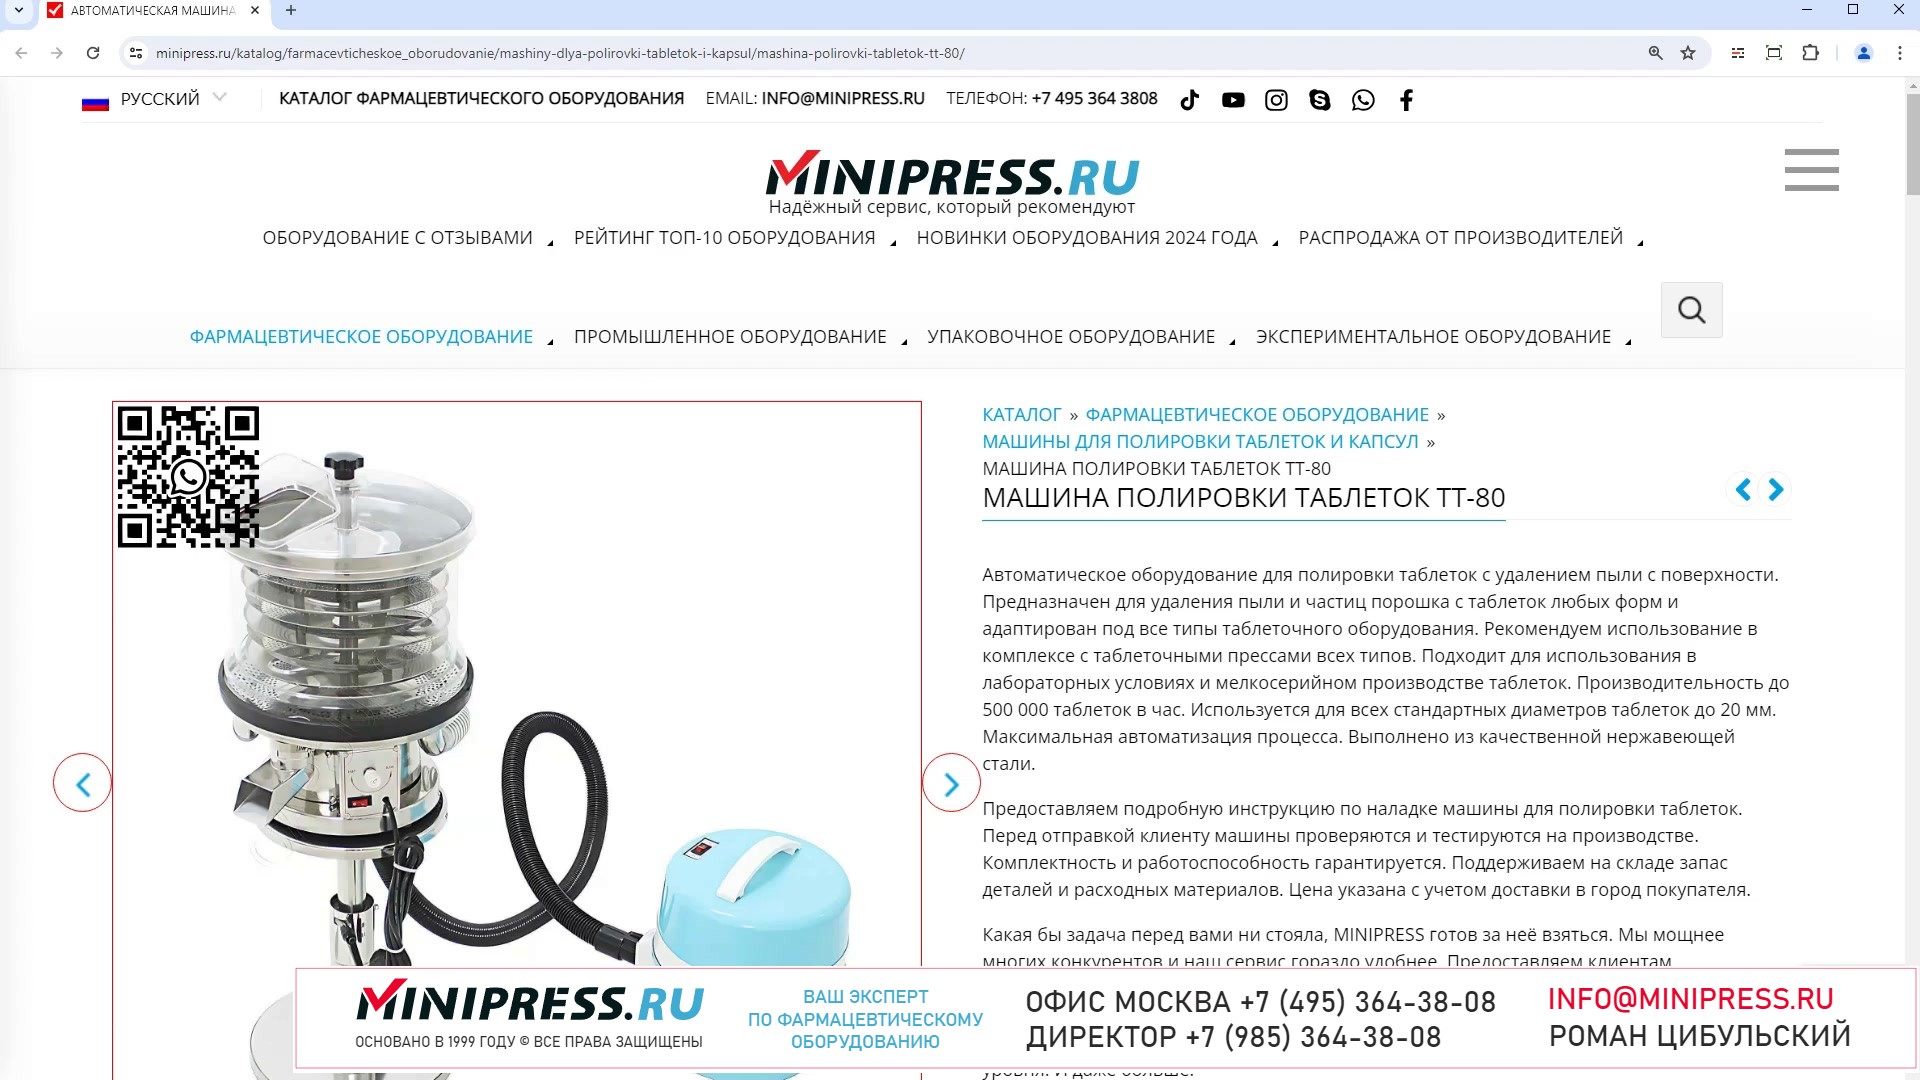 Minipress.ru Машина полировки таблеток TT-80